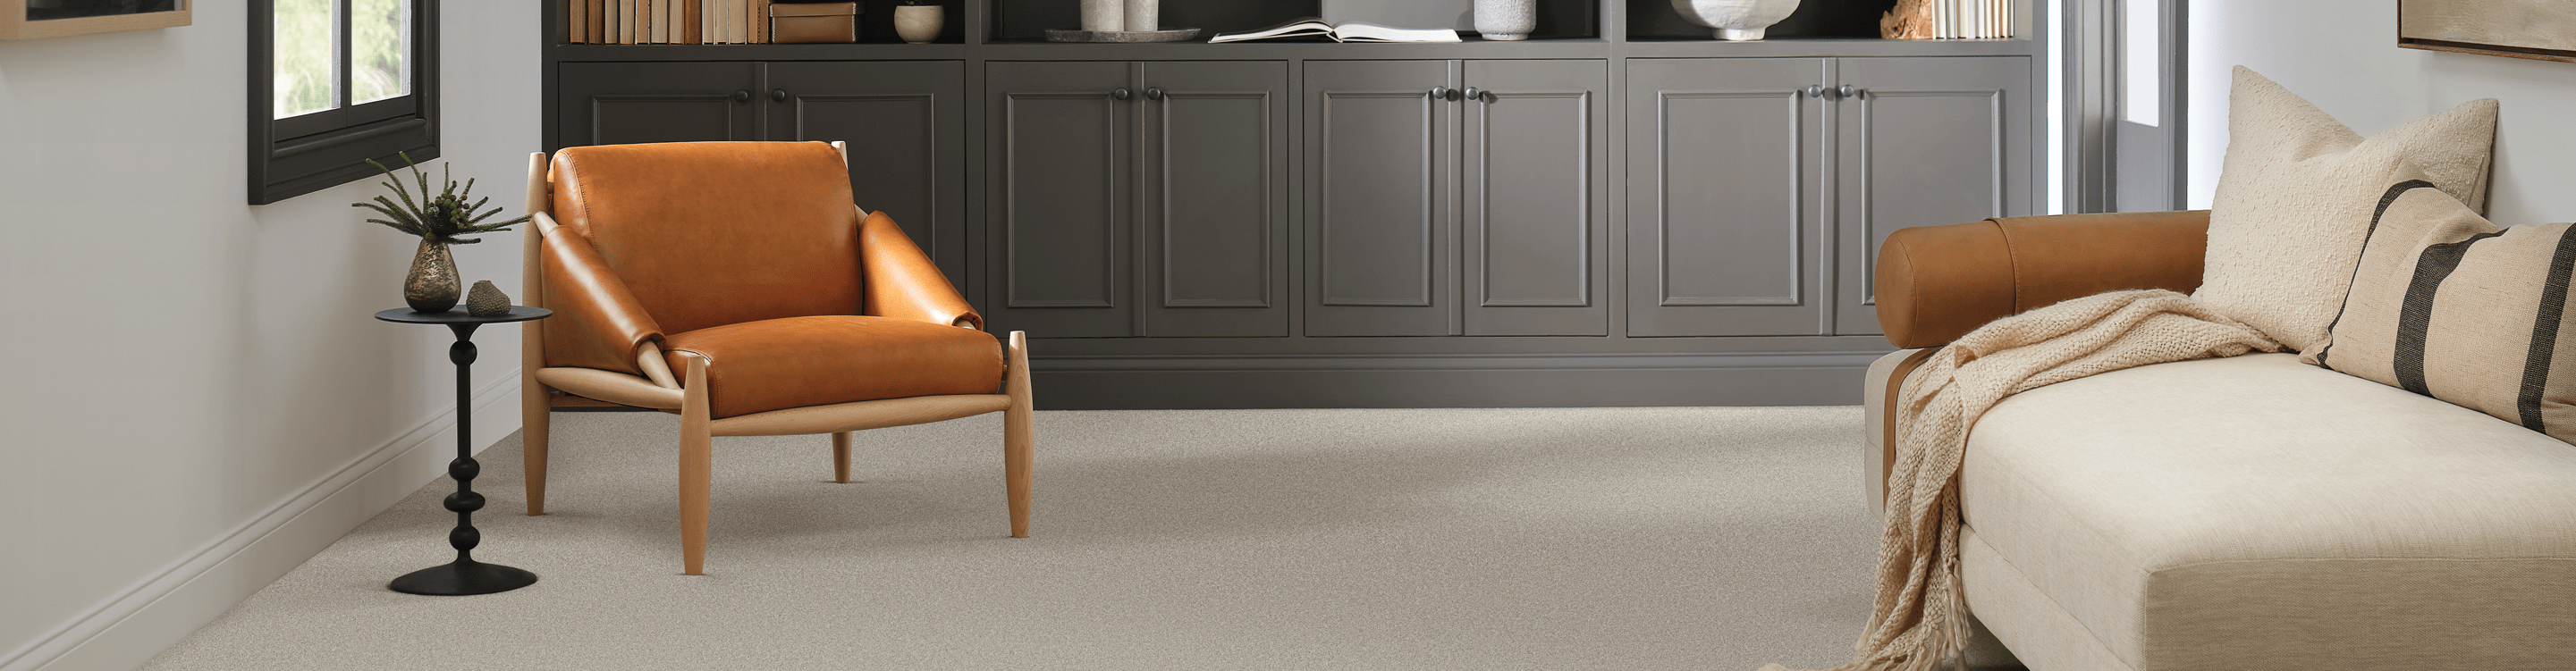 PET carpet Eco-Friendly flooring in living room with gray bookshelf room scene